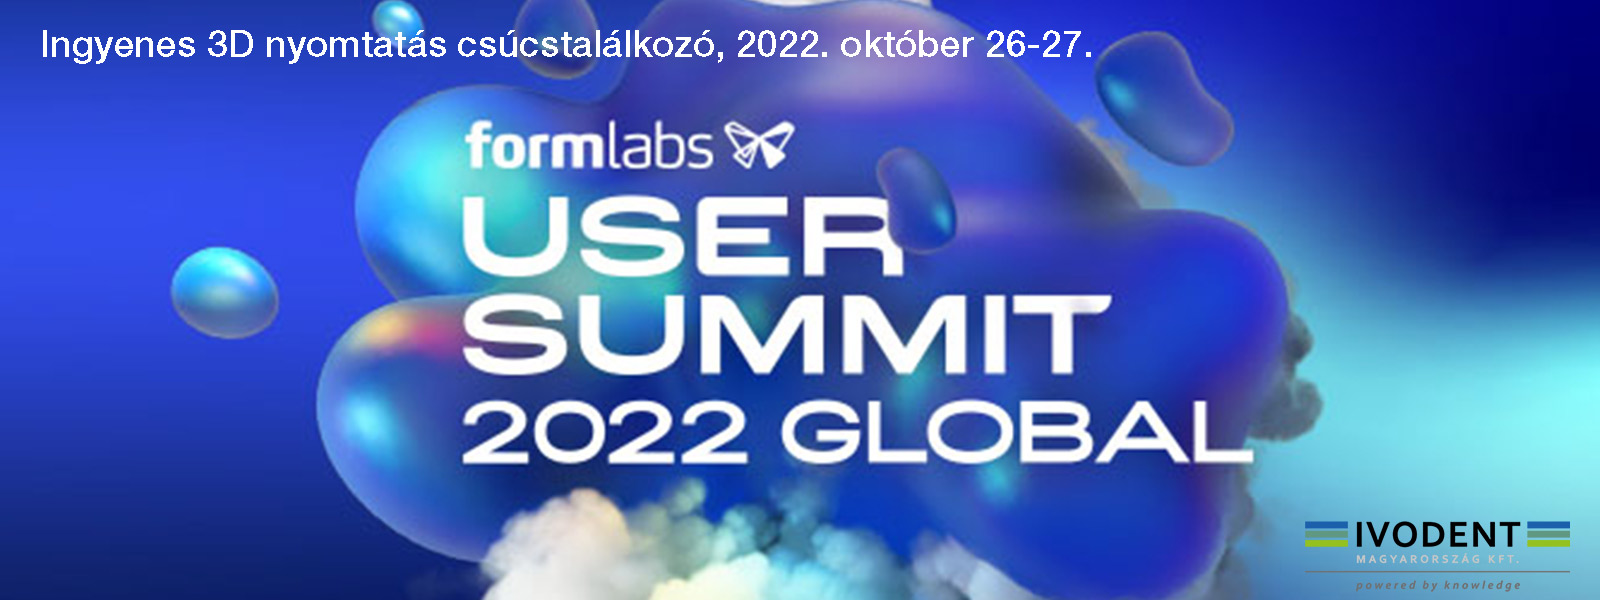 Formlabs User Summit 2022 Global